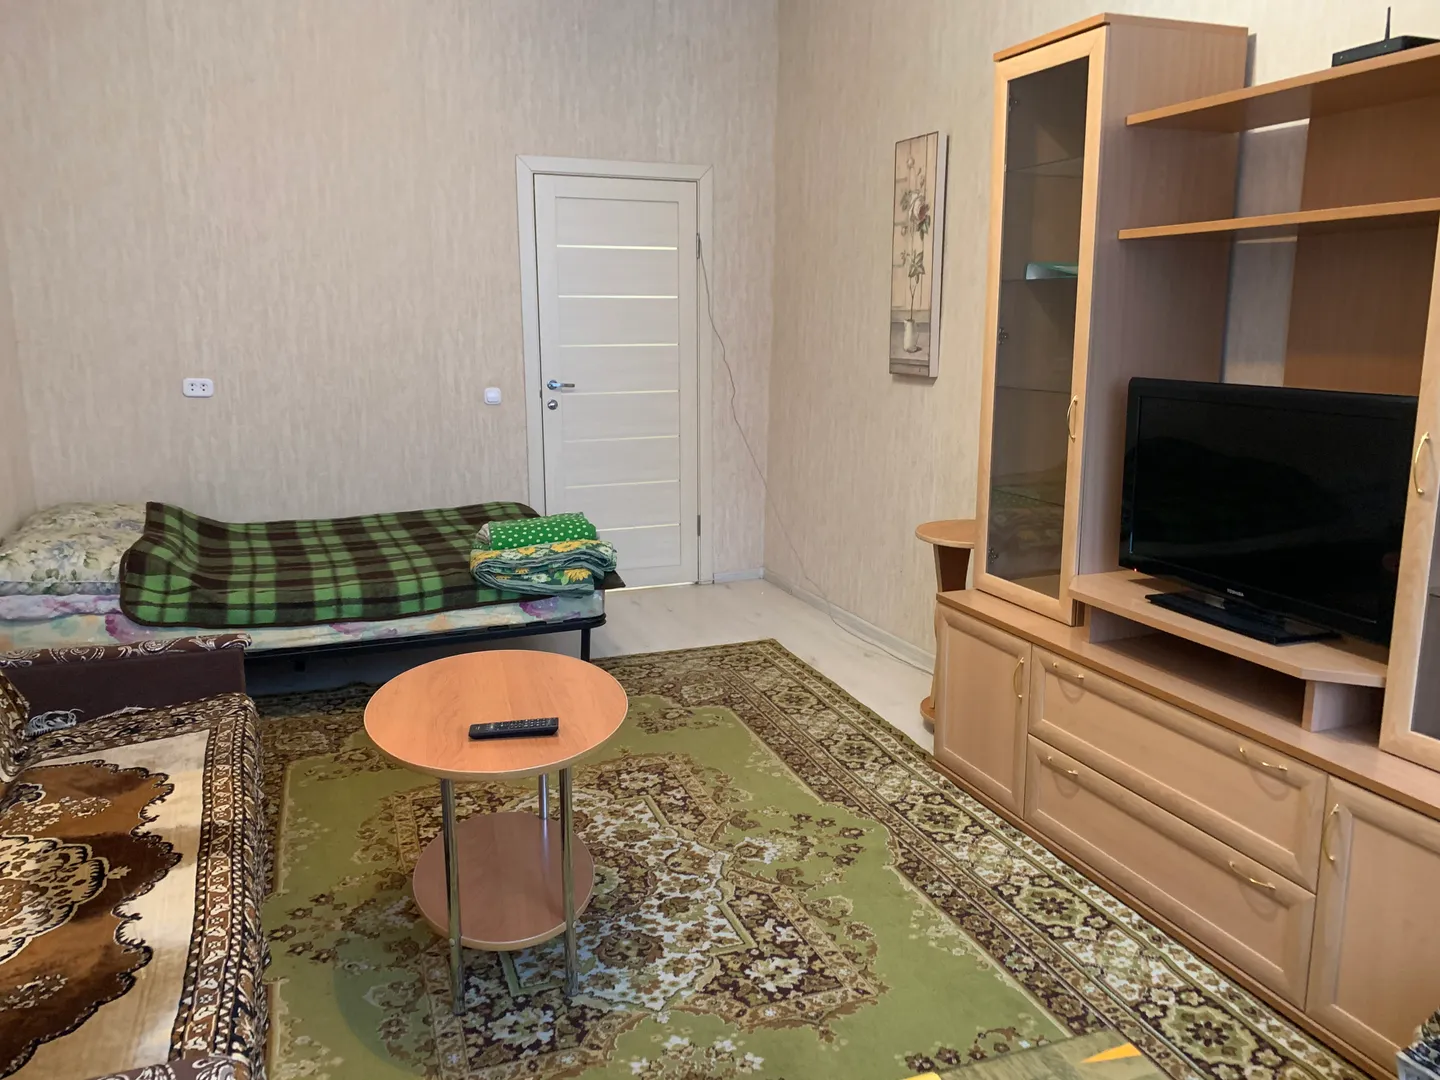 2х-комнатная квартира Свердлова 36 в Железногорске - фото 5